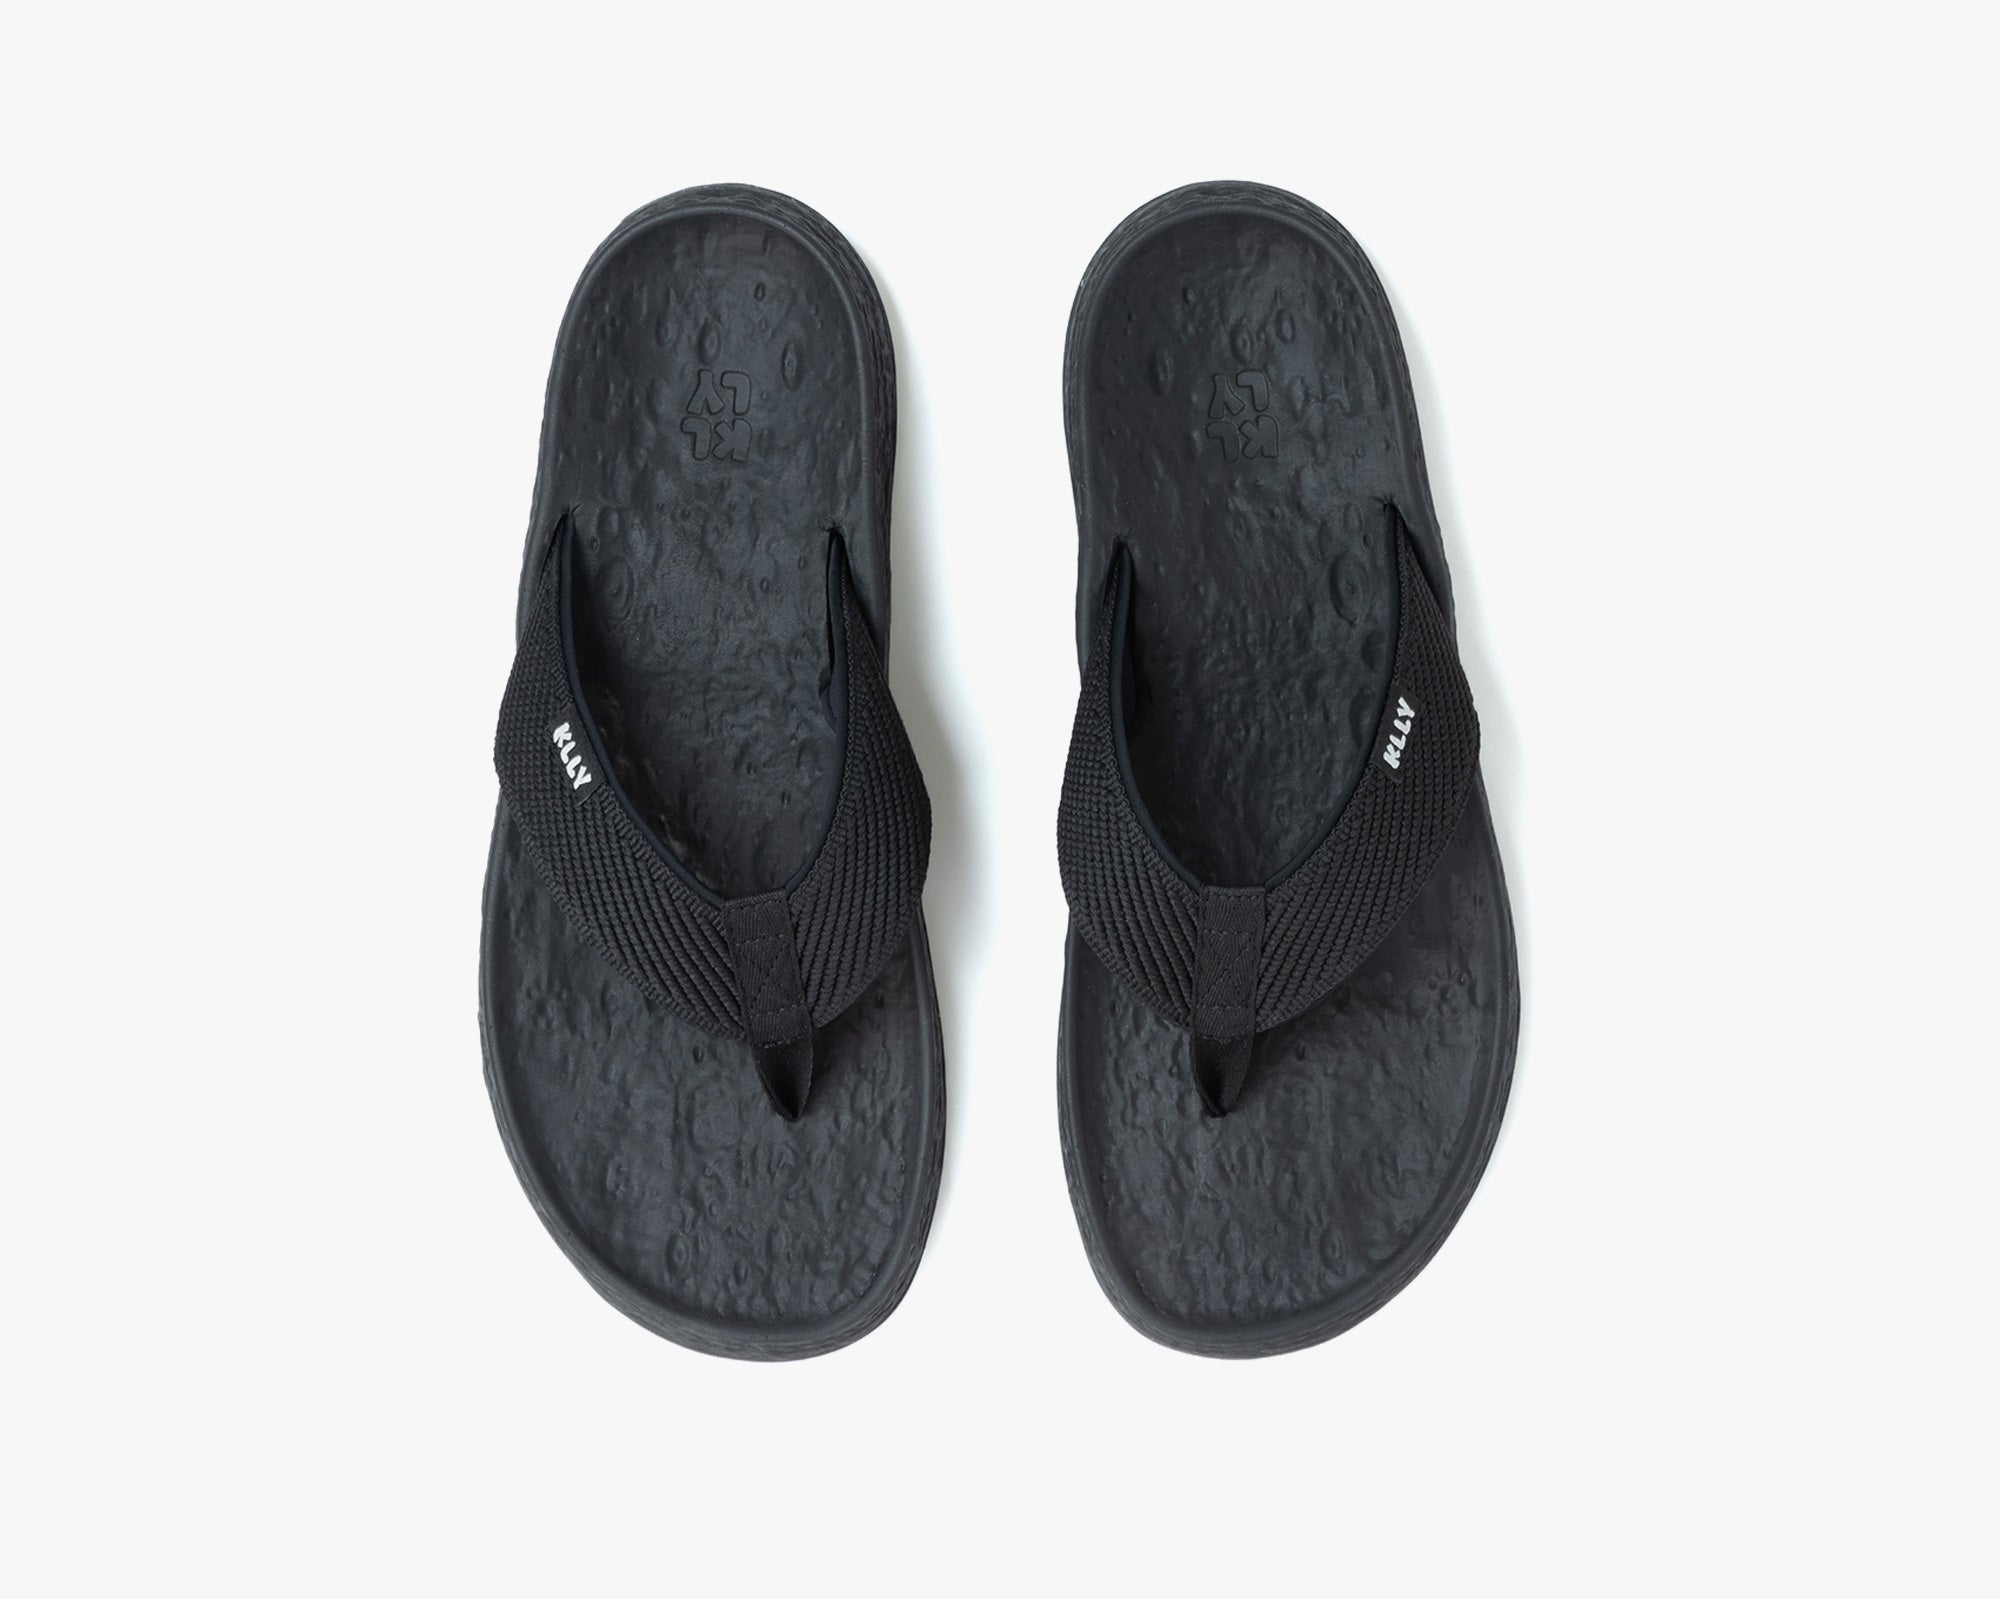 Men’s beach sandals - klly sandals new moon?